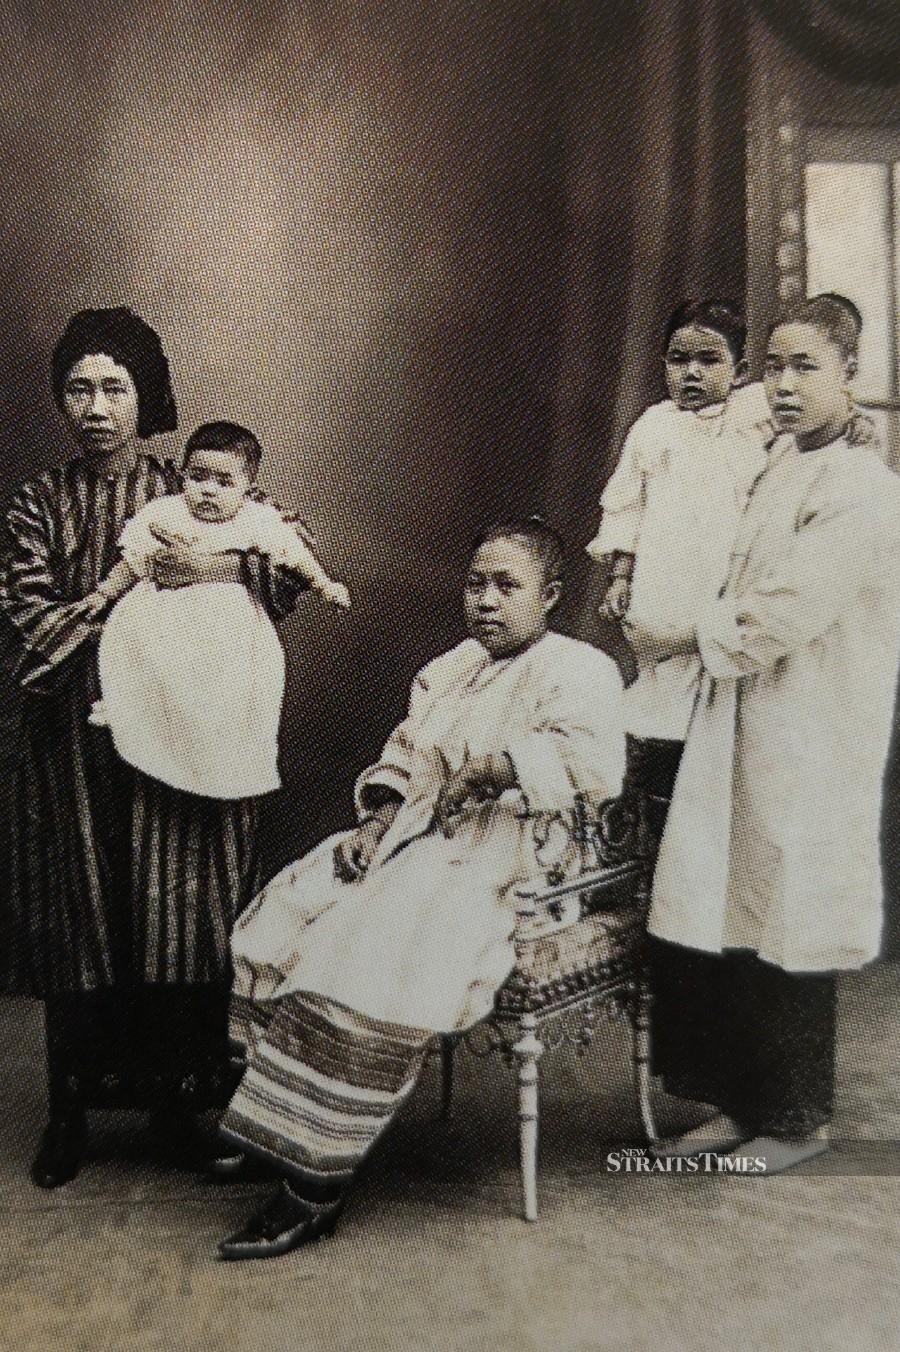  Early 20th century photograph showing Malay women dressed in baju kurung.